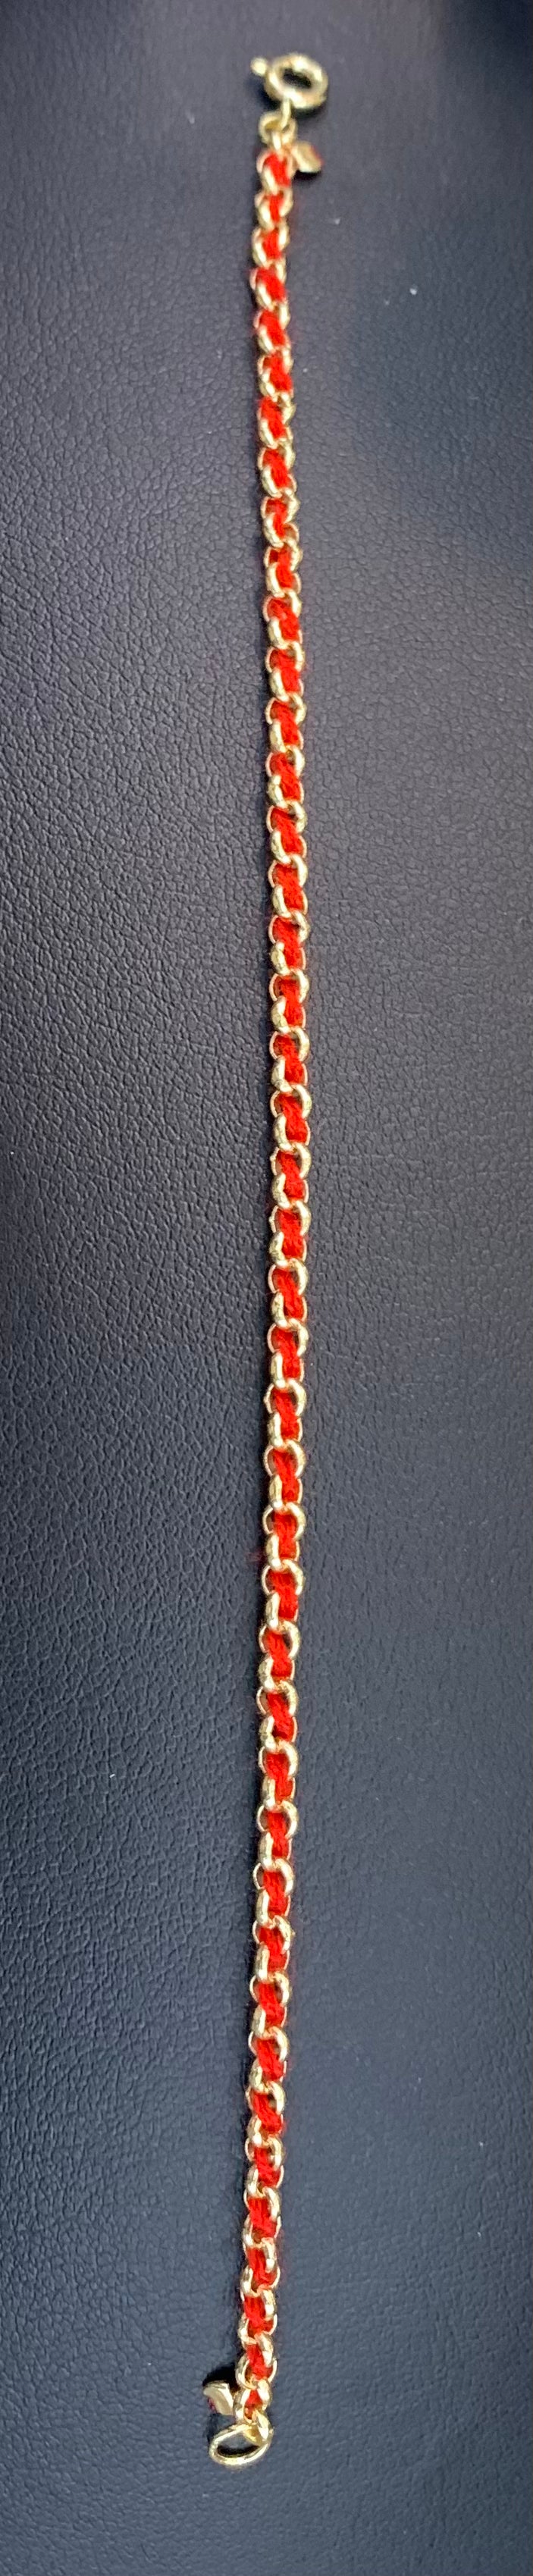 Kever Rachel Red String in 925 Silver Bracelet